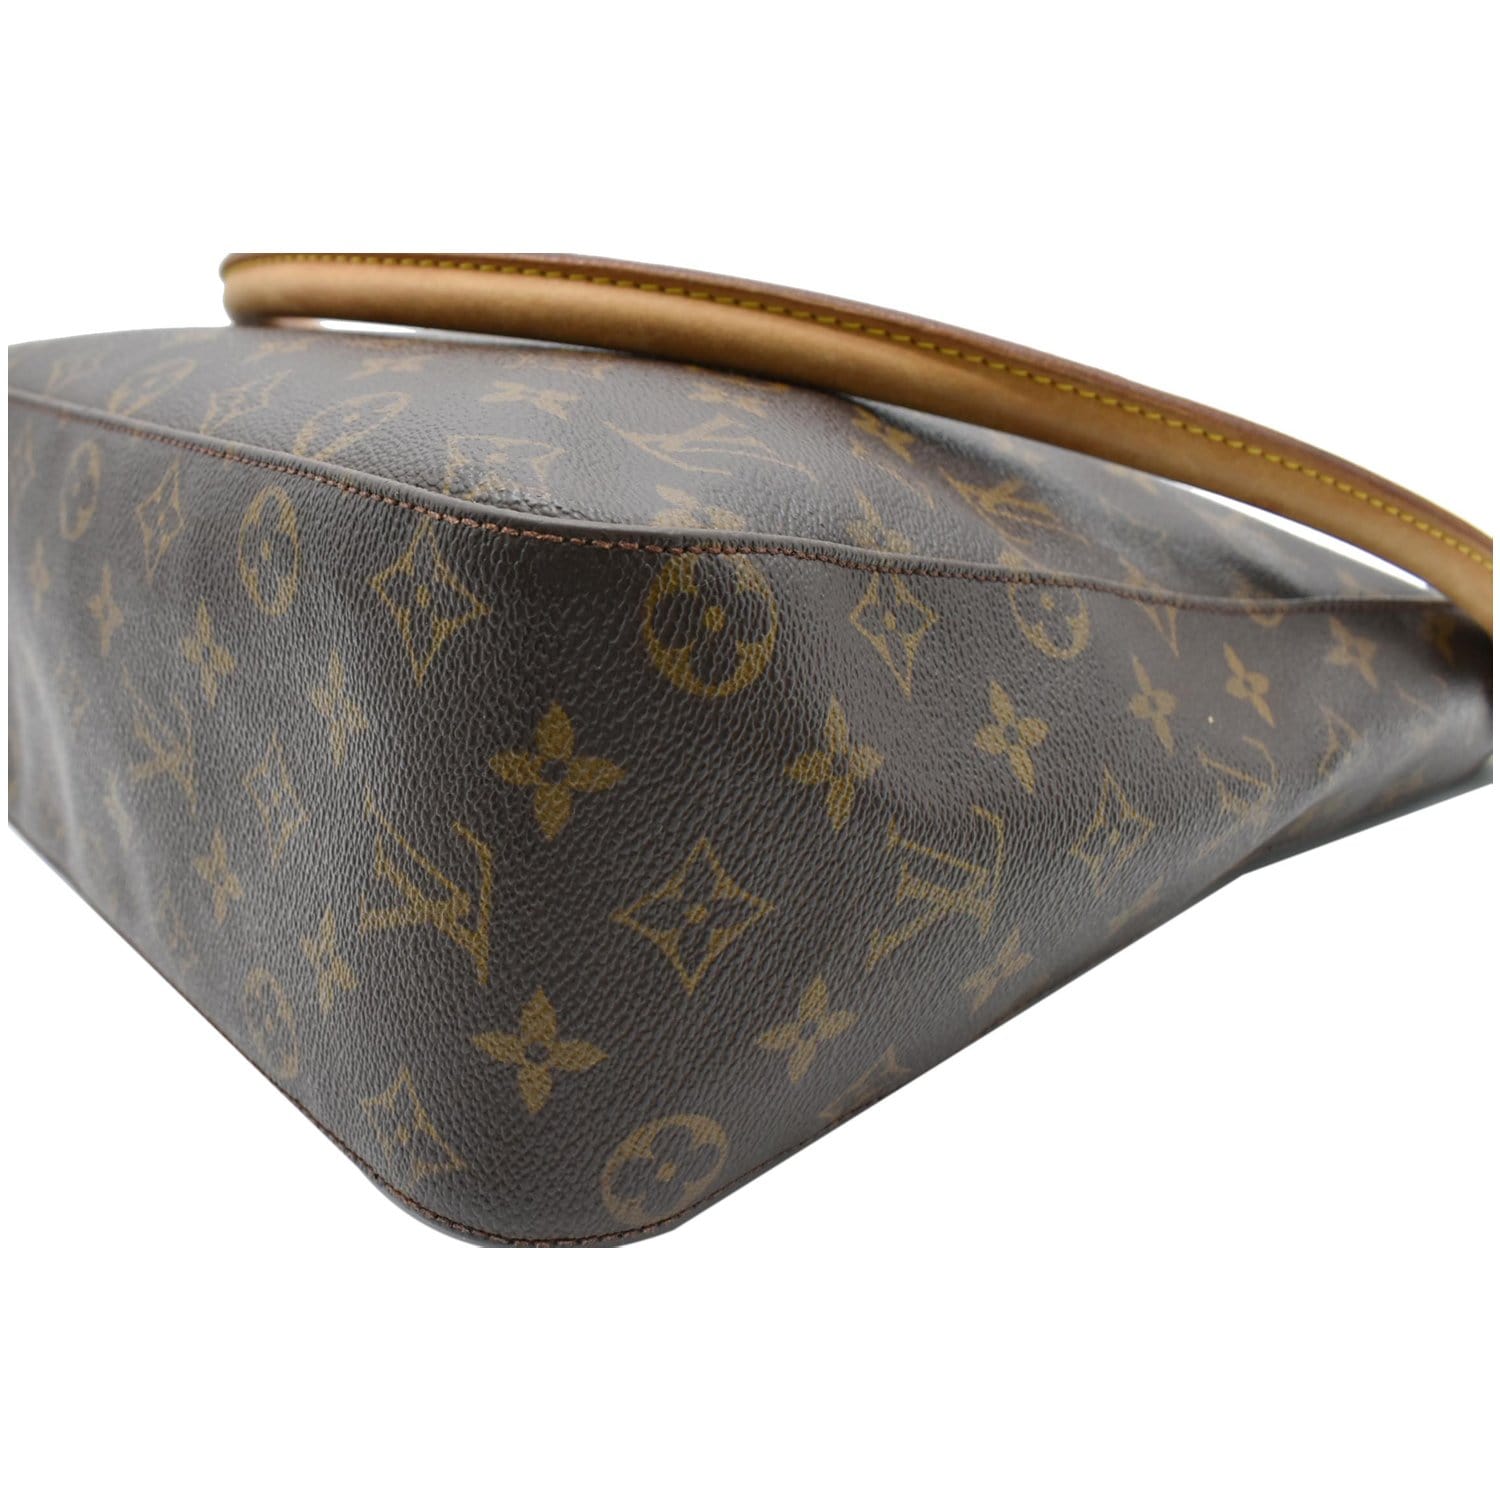 Shoulder bag Louis Vuitton, Loop Bag »